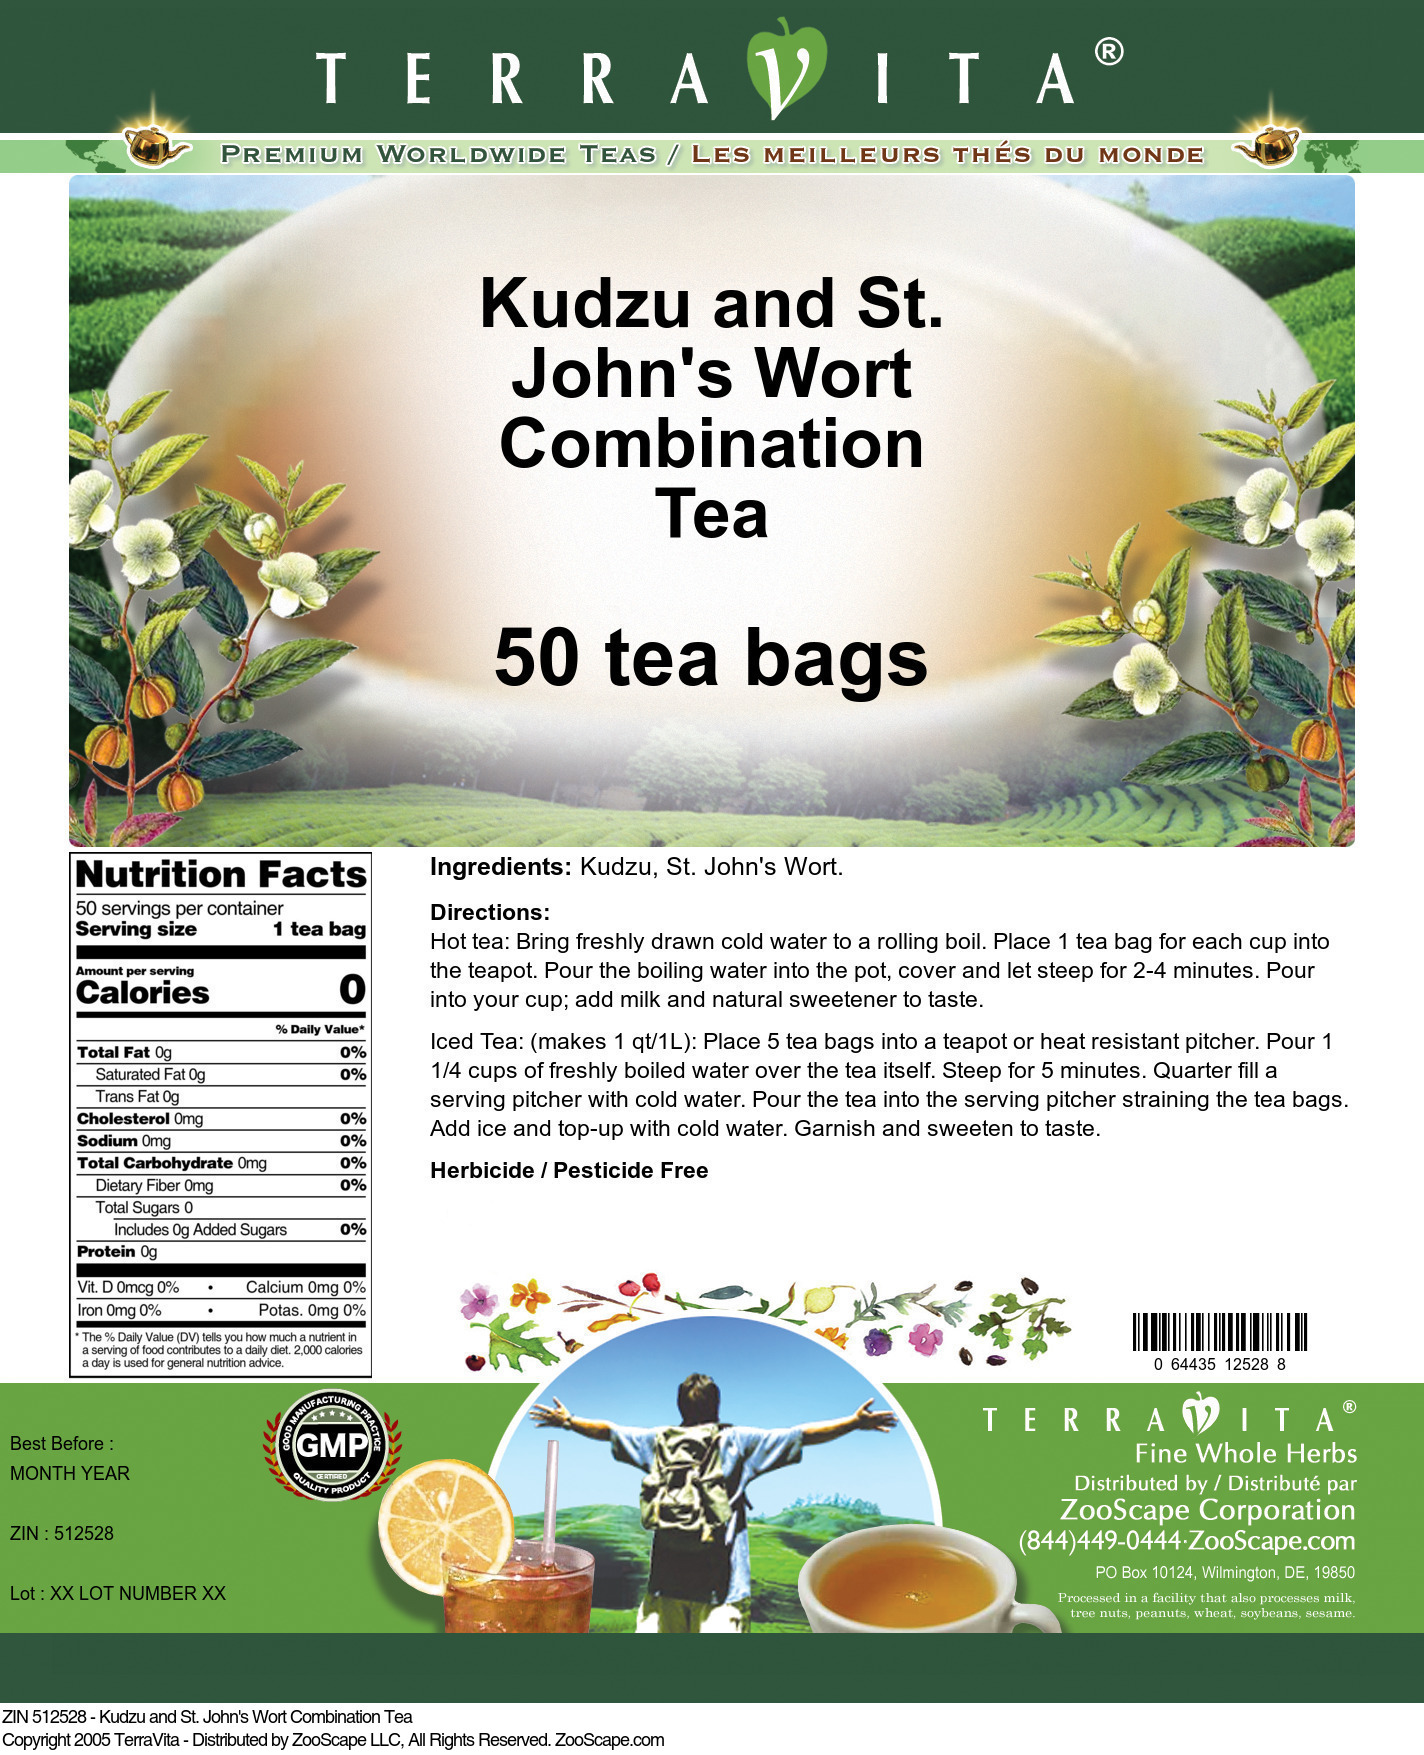 Kudzu and St. John's Wort Combination Tea - Label